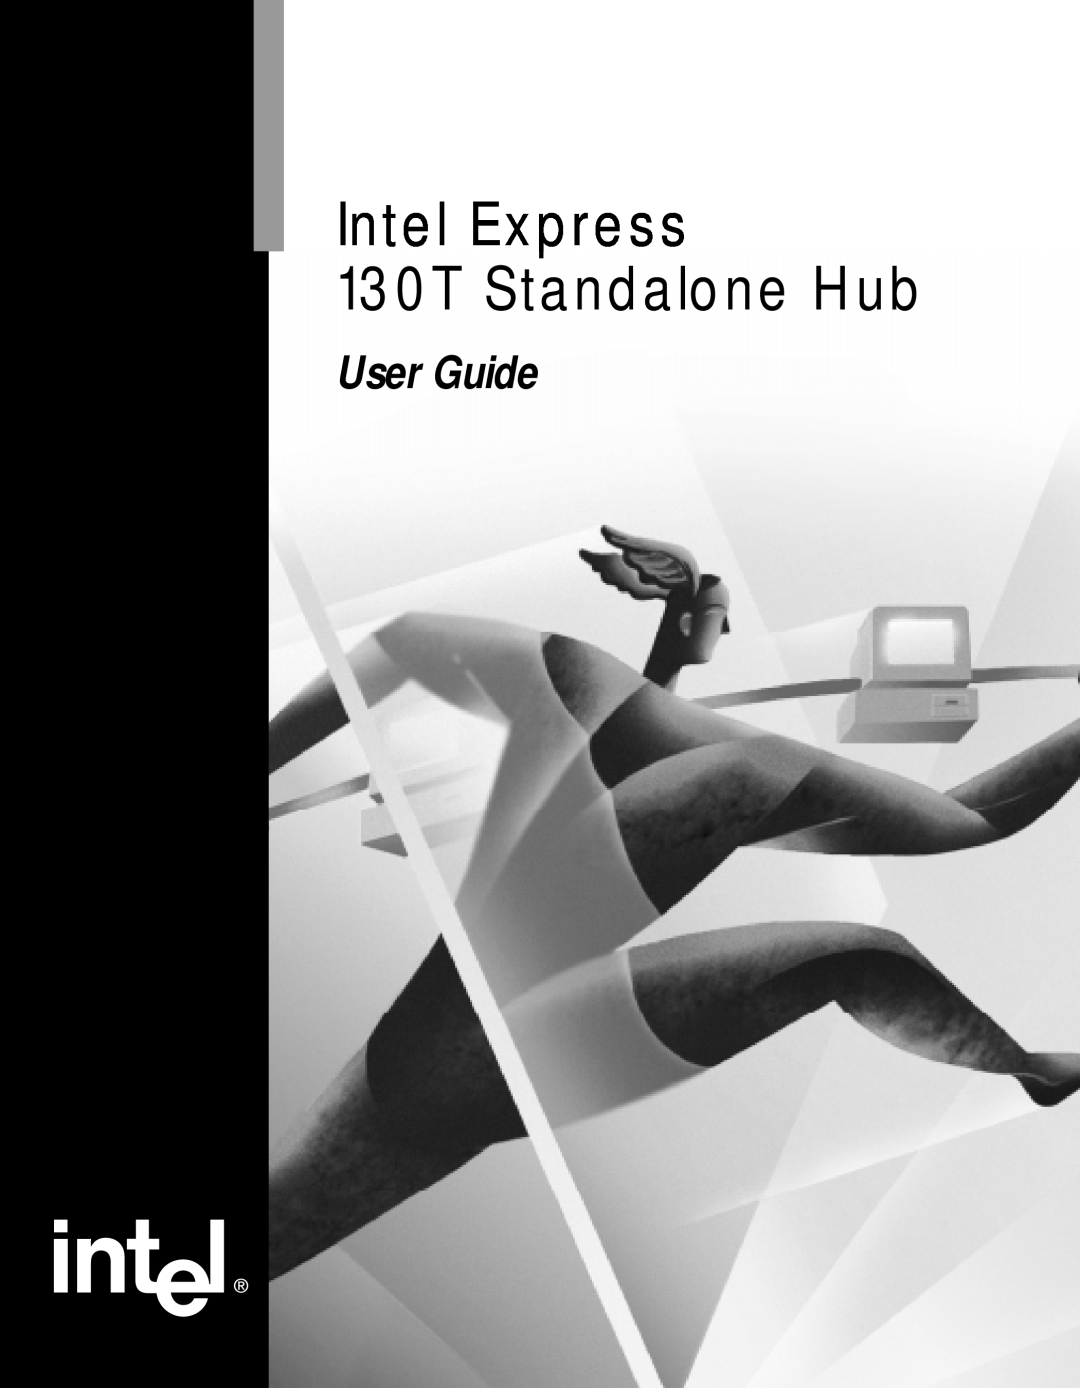 Intel manual Intel Express 130T Standalone Hub, User Guide 